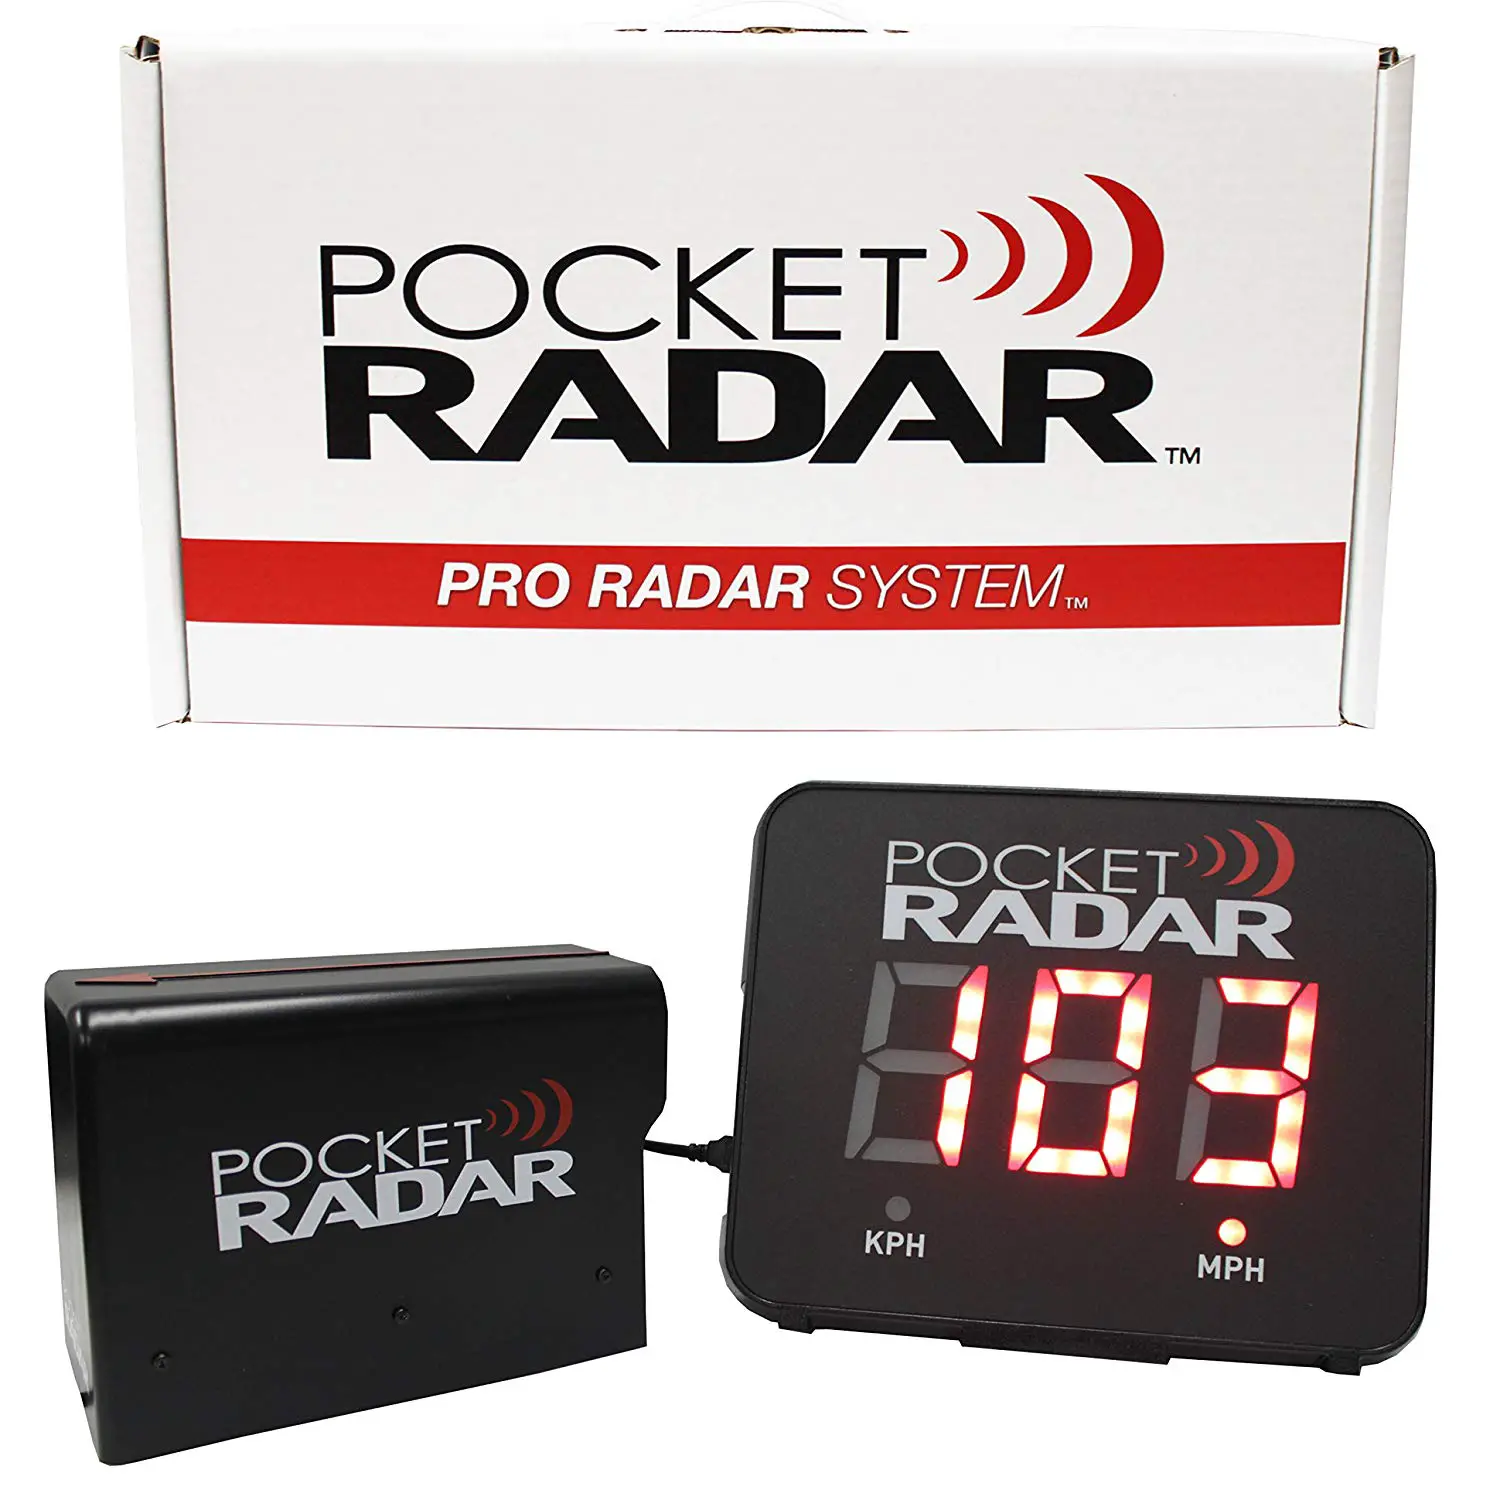 Pocket Radar - Pro Baseball Radar System with Smart Display